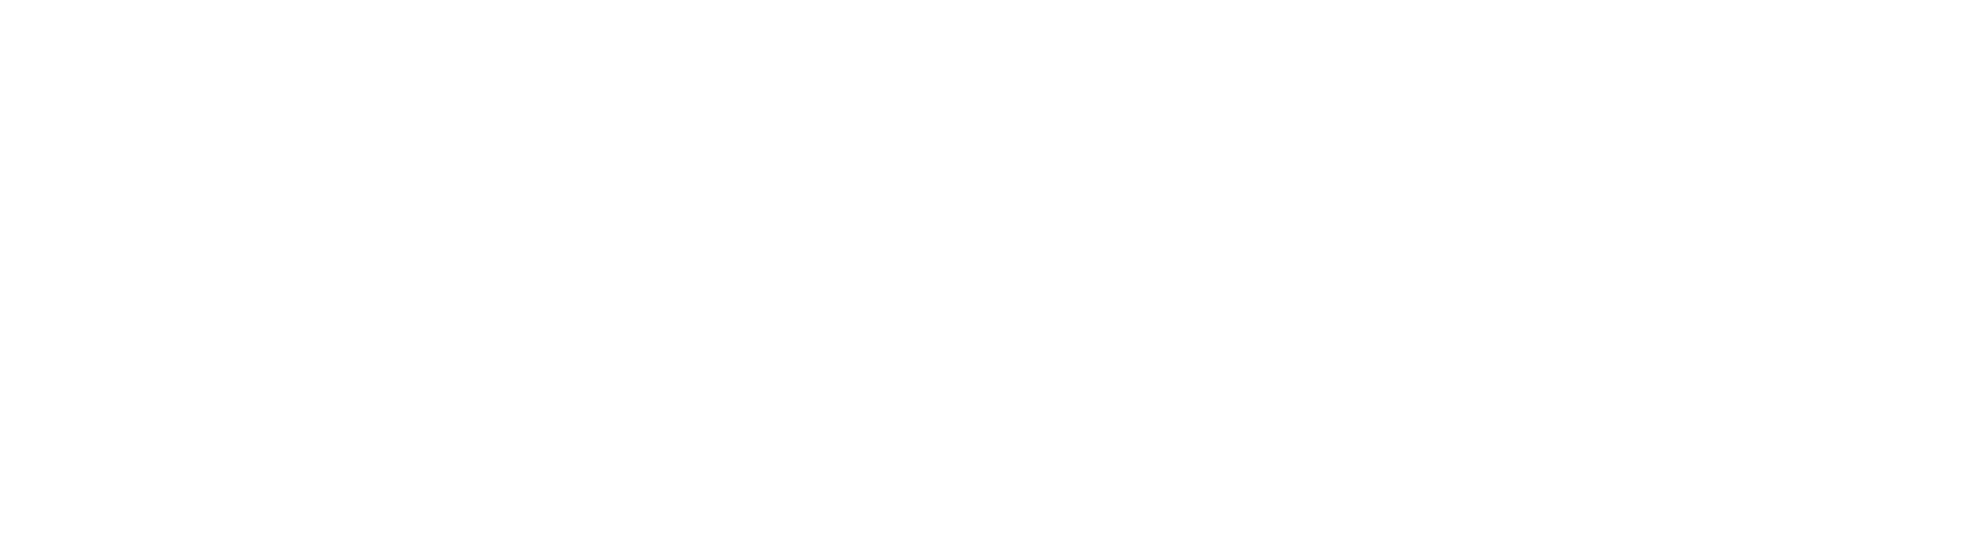 SORA ⺠間⼩型⼈⼯衛星 ／ 衛星データ活⽤ ／ 遠隔操作ロボット